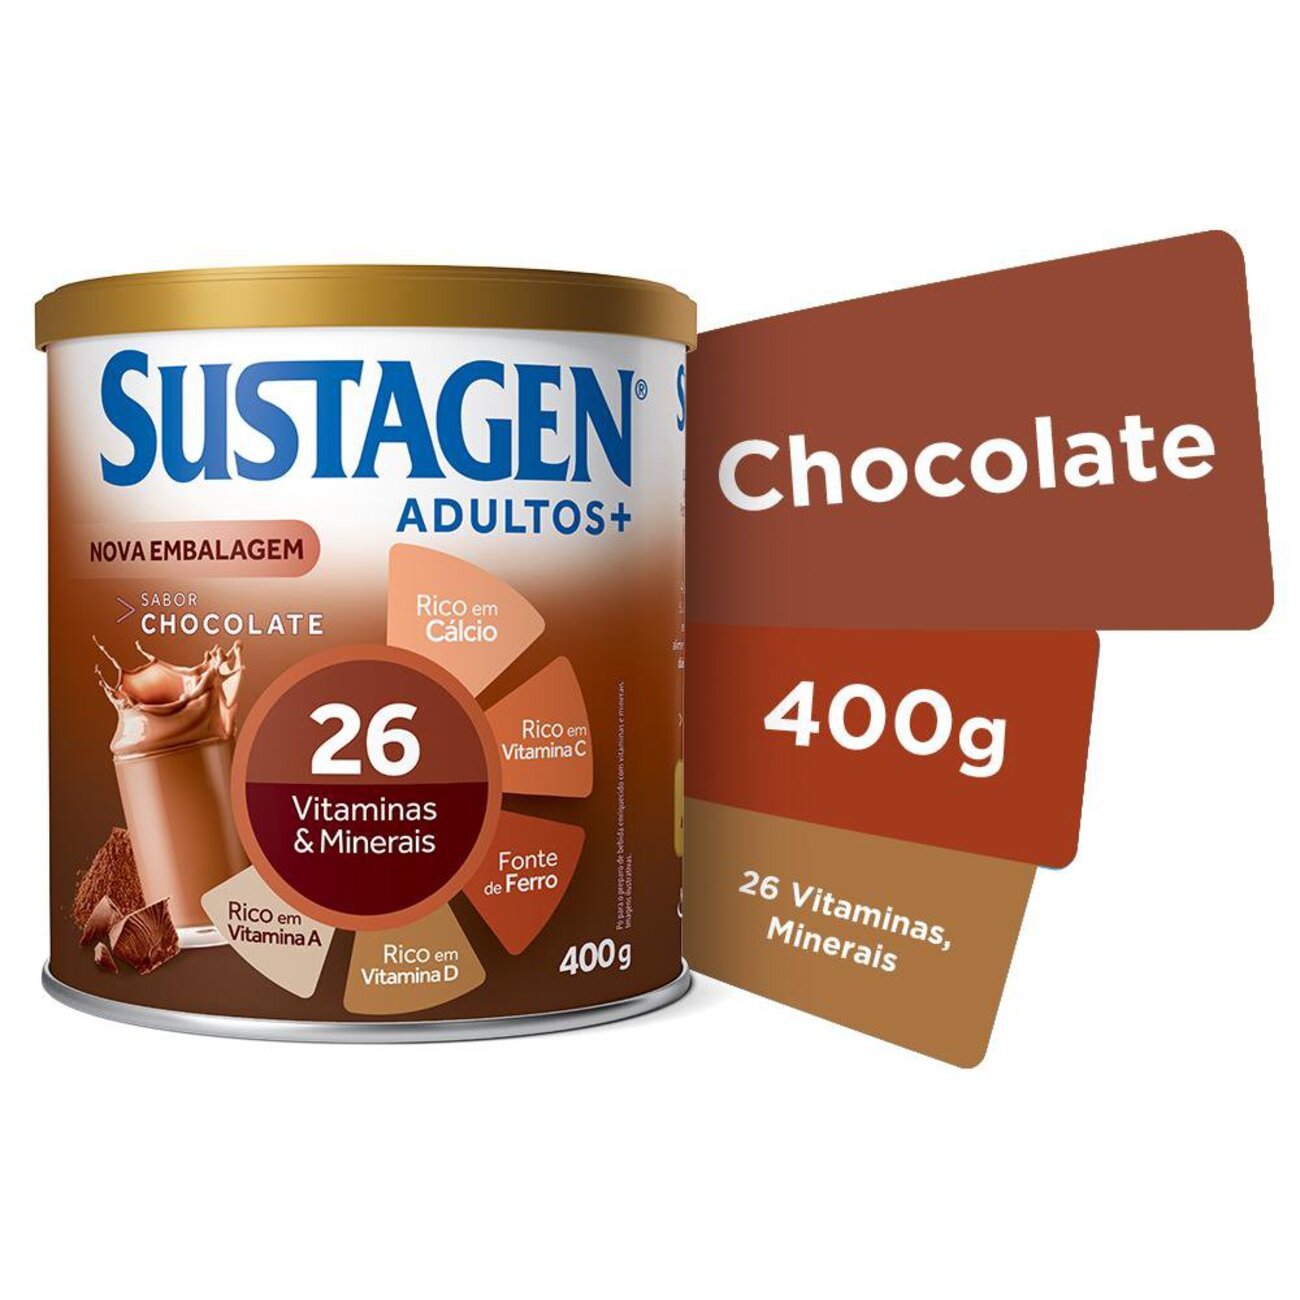 Complemento Alimentar Sustagen Adultos+ Sabor Chocolate - Lata 400g